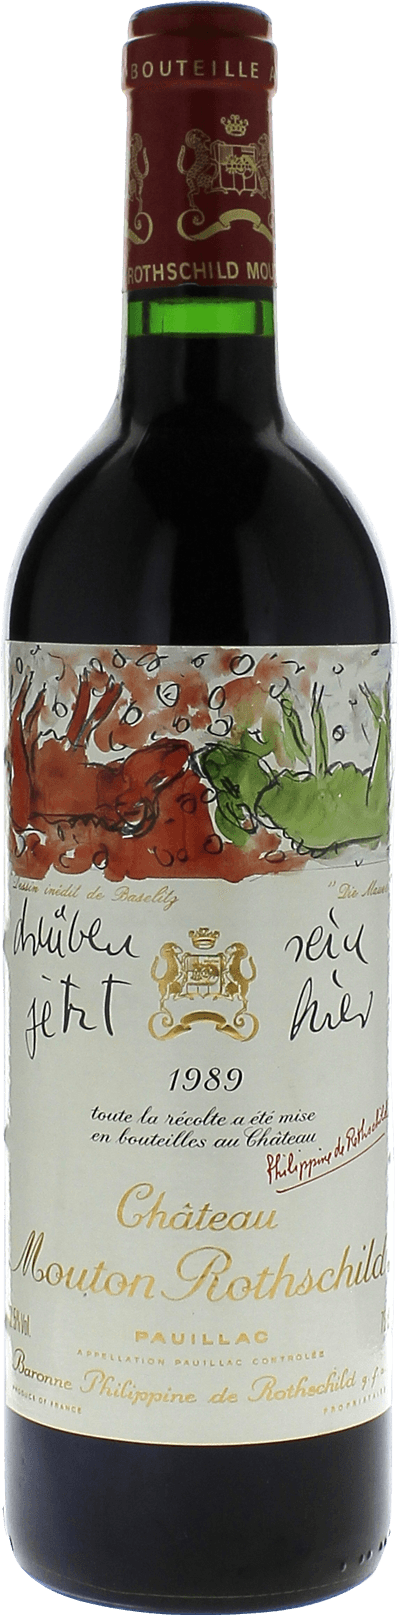 Mouton rothschild 1989 1er Grand cru class Pauillac, Bordeaux rouge